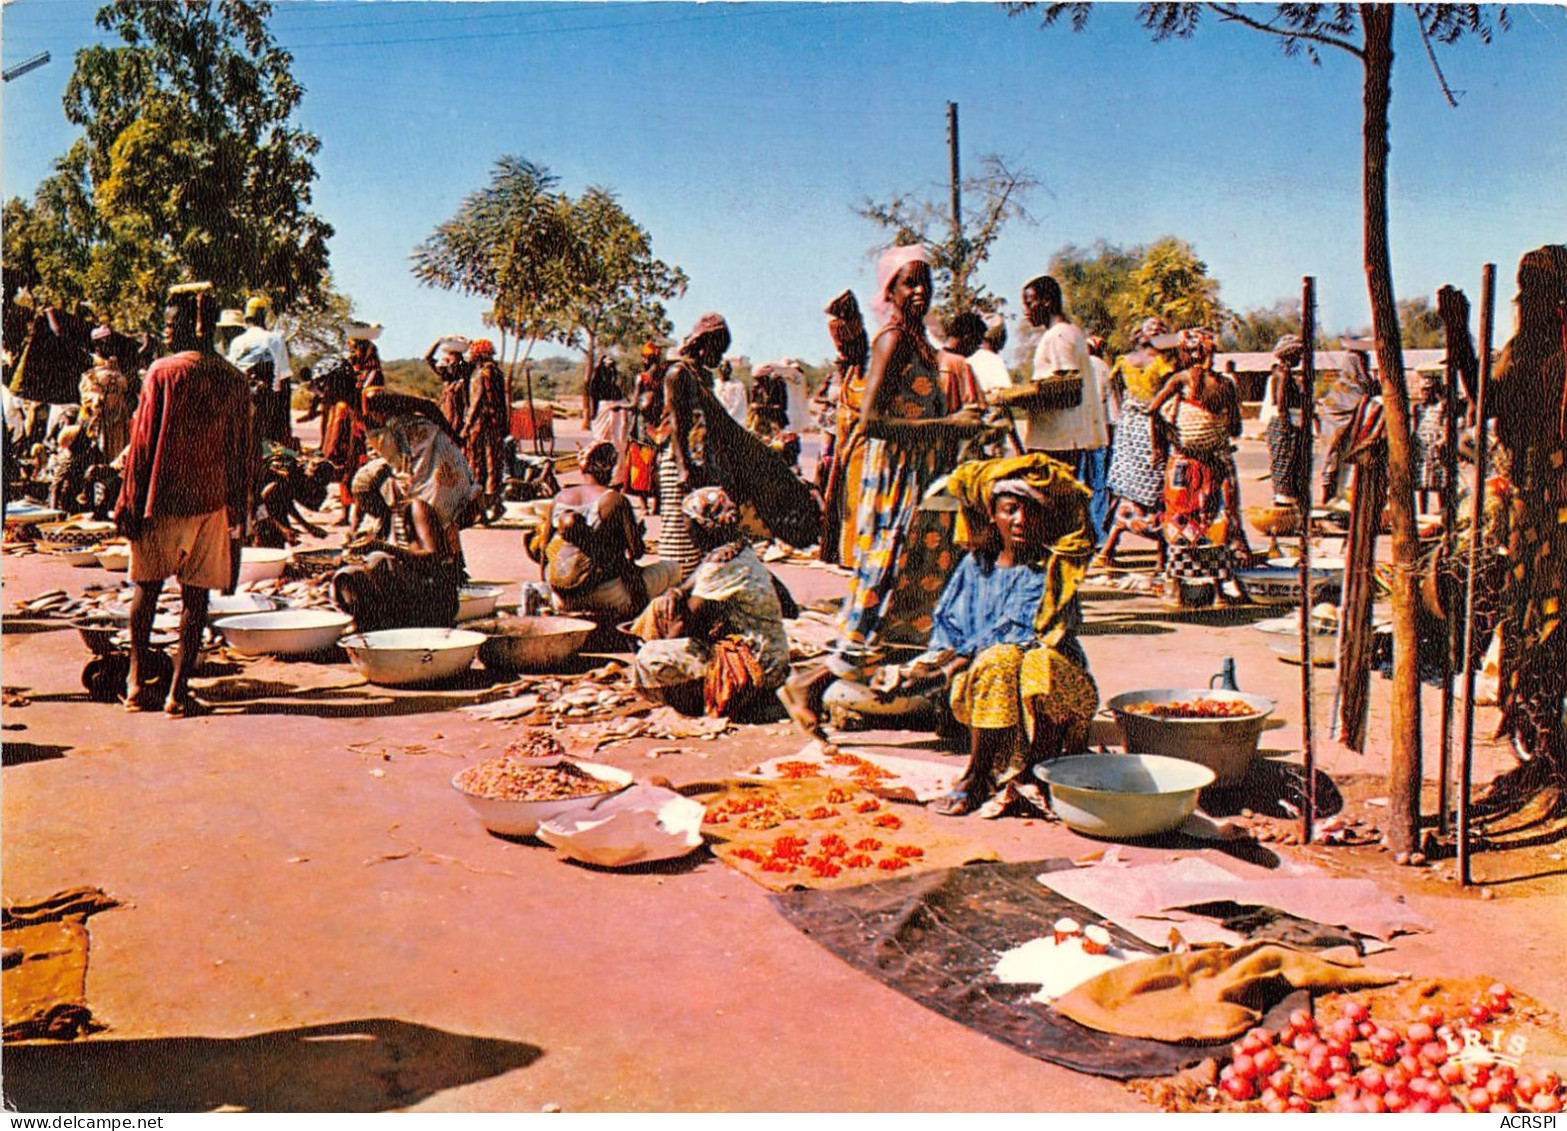 Burkina Faso Gaoua Poni Pougoulis Marche  Africain  (scan Recto Verso ) Nono0039 - Burkina Faso